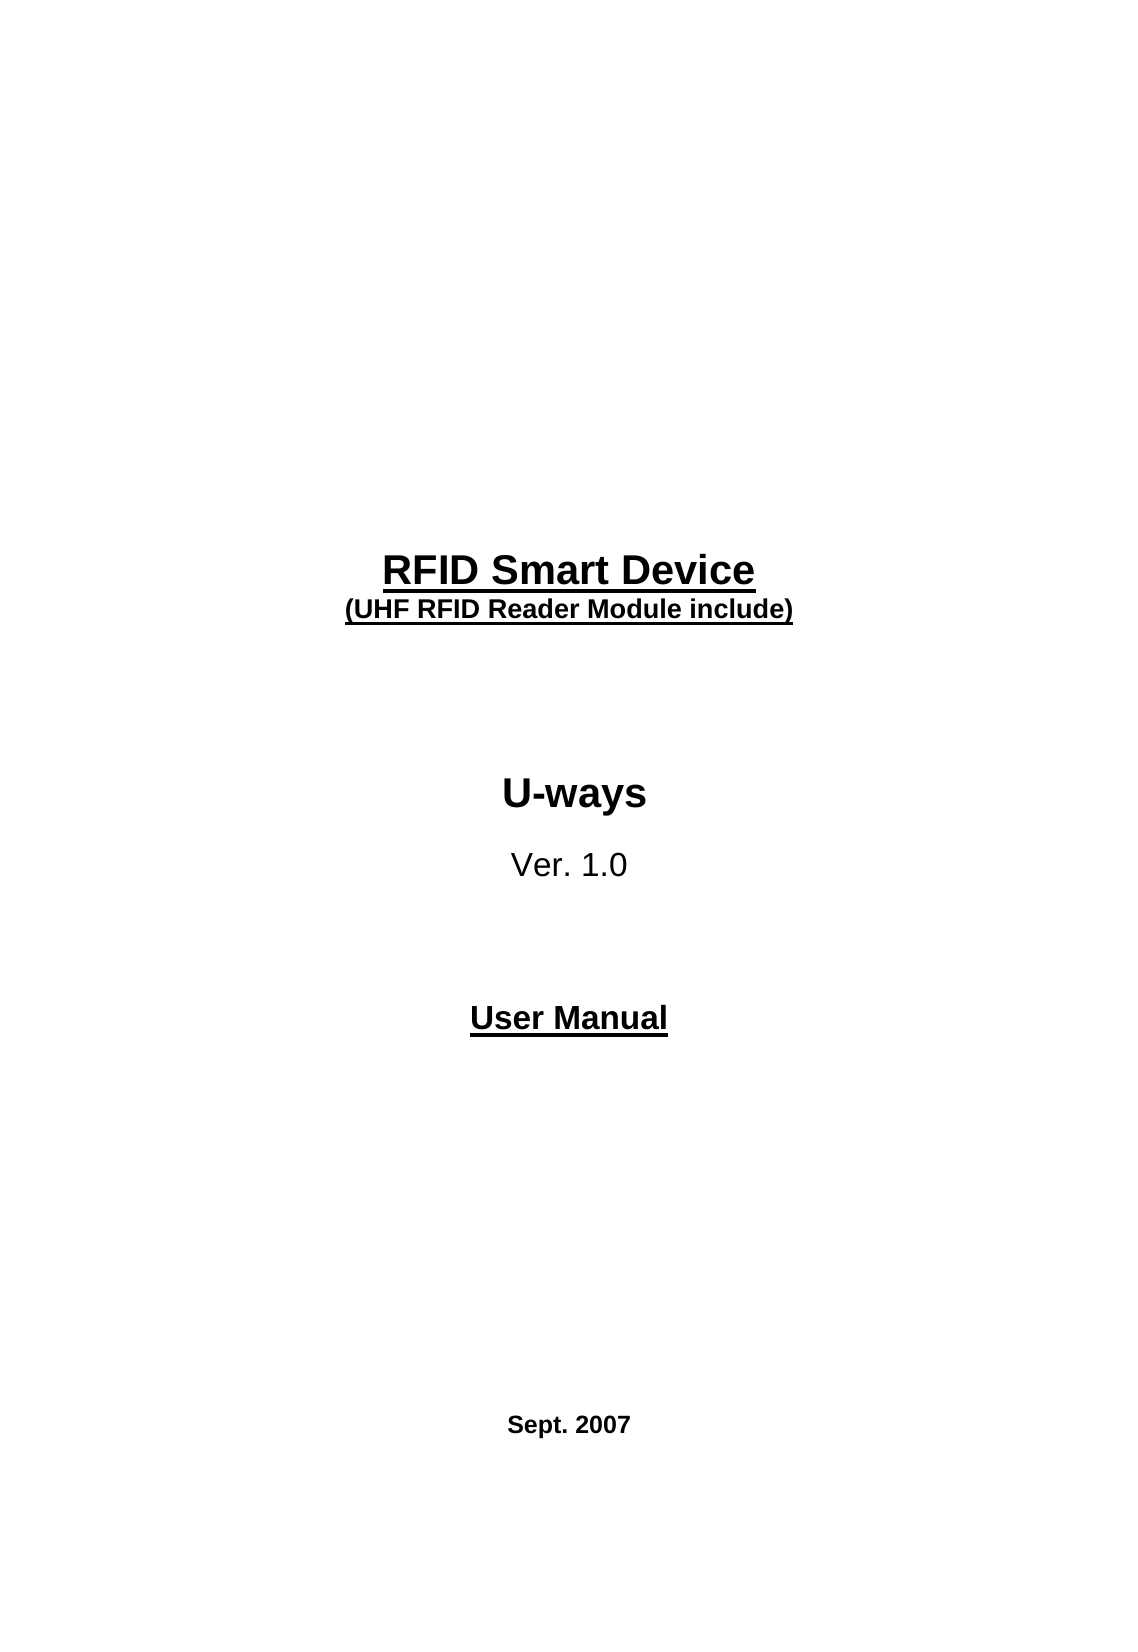                RFID Smart Device  (UHF RFID Reader Module include)       U-ways  Ver. 1.0     User Manual              Sept. 2007  